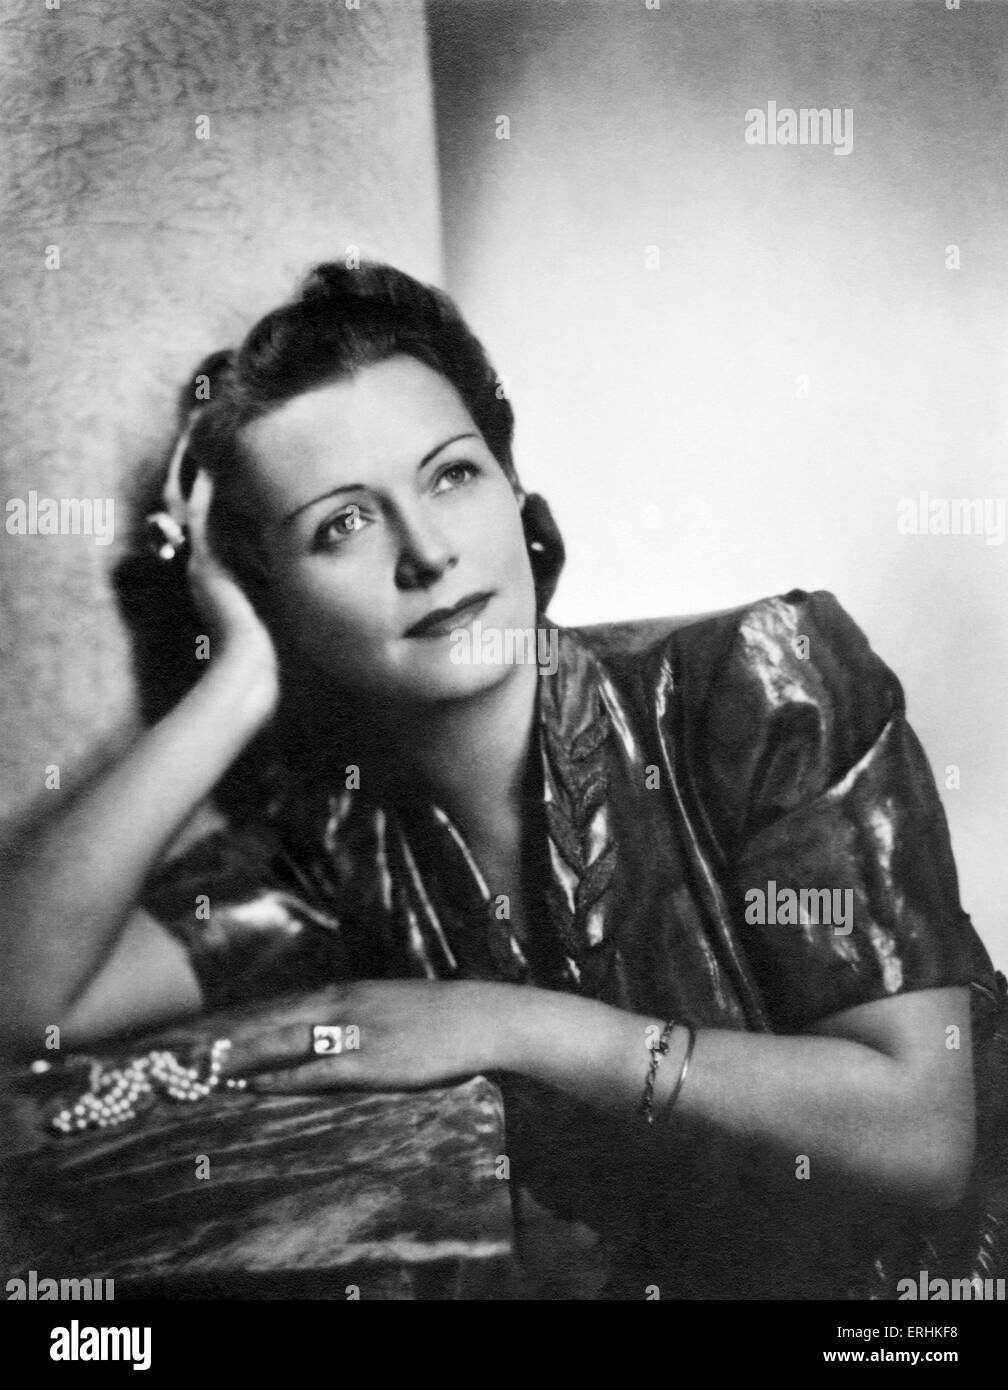 Olga Chekhova (o Tschechowa / Tchechowa ) - Ritratto del russo attrice cinematografica. Nato Olga Knipper, sposato Anton Chekhov 's Foto Stock